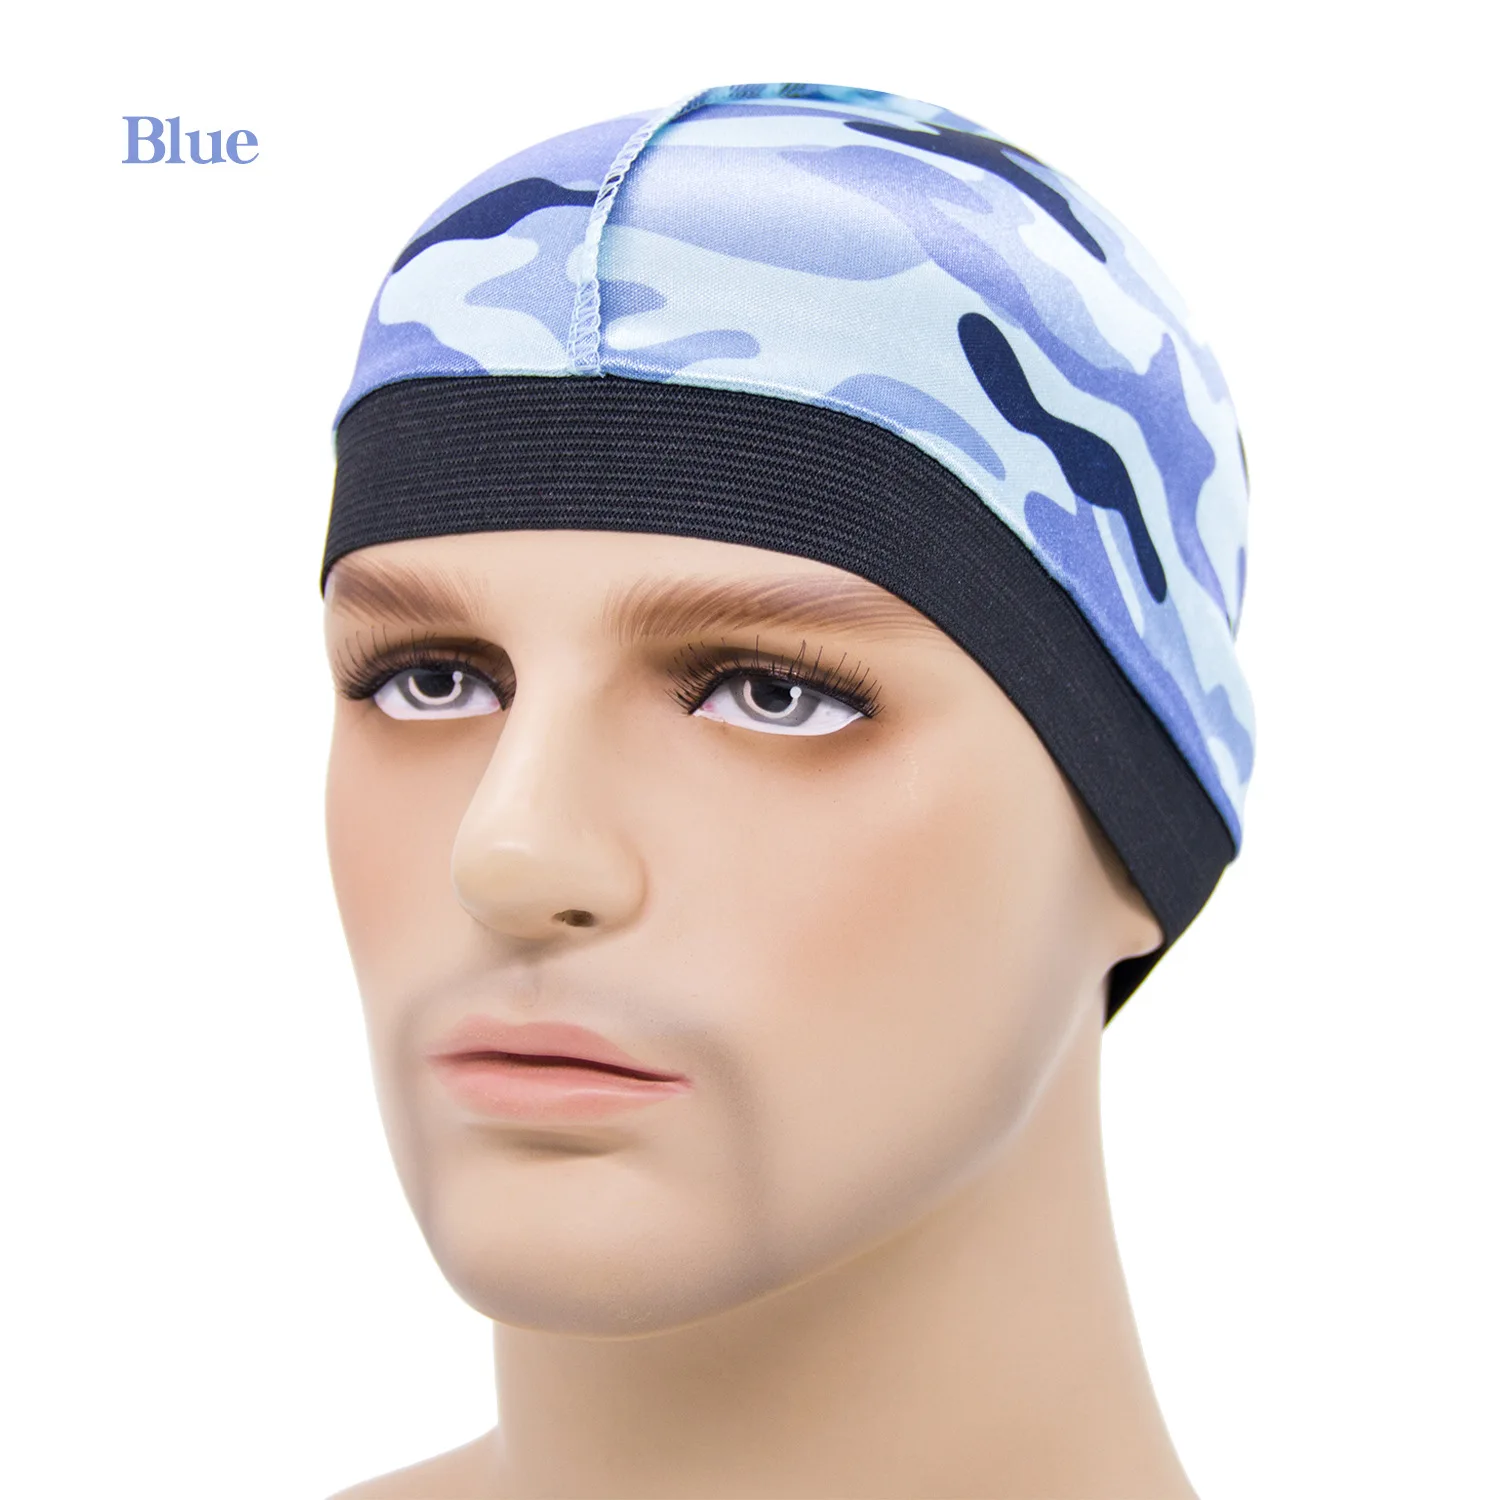 

Stain Bonnet Silky Dome Cap Stretch Solid Color Bowler Hair Care Wave Caps Wholesale